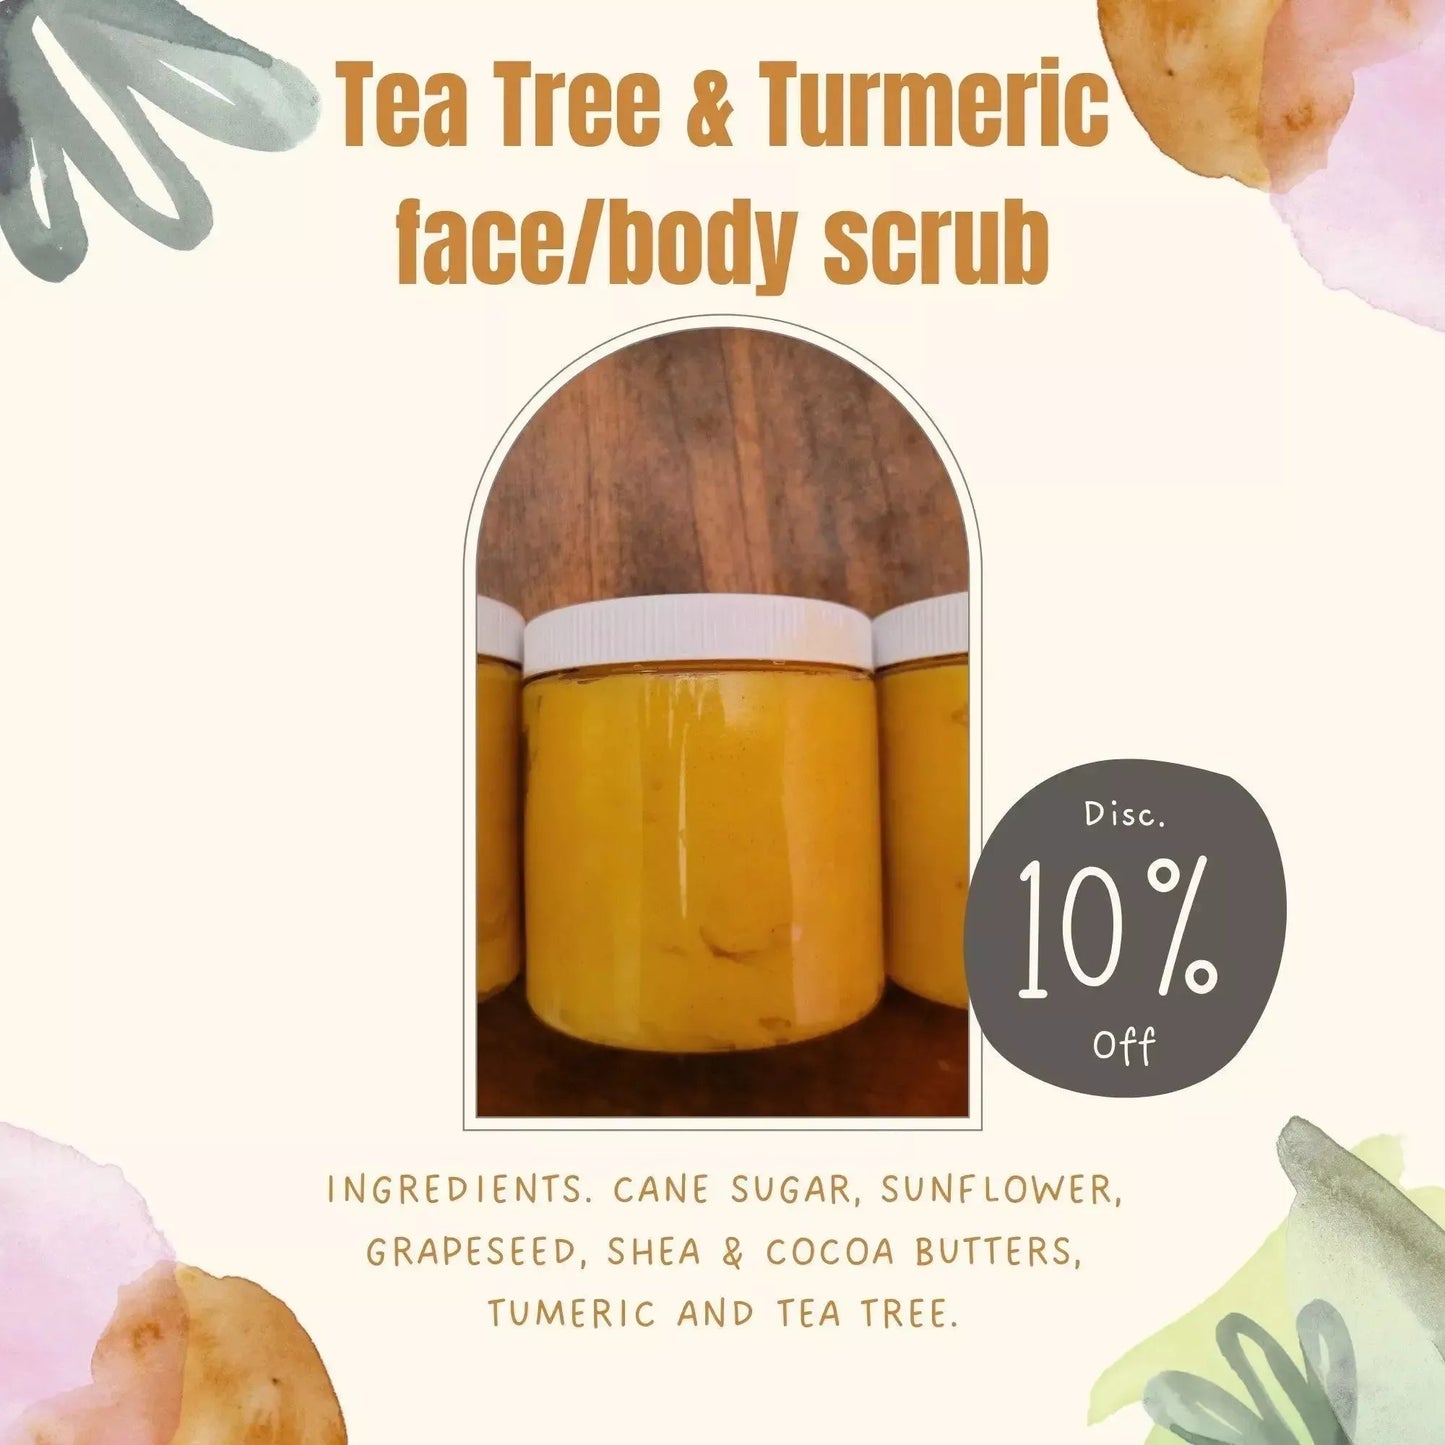 Turmeric Face Scrub Tea Tree & Turmeric face/body scrub - Godiva Oya Bey